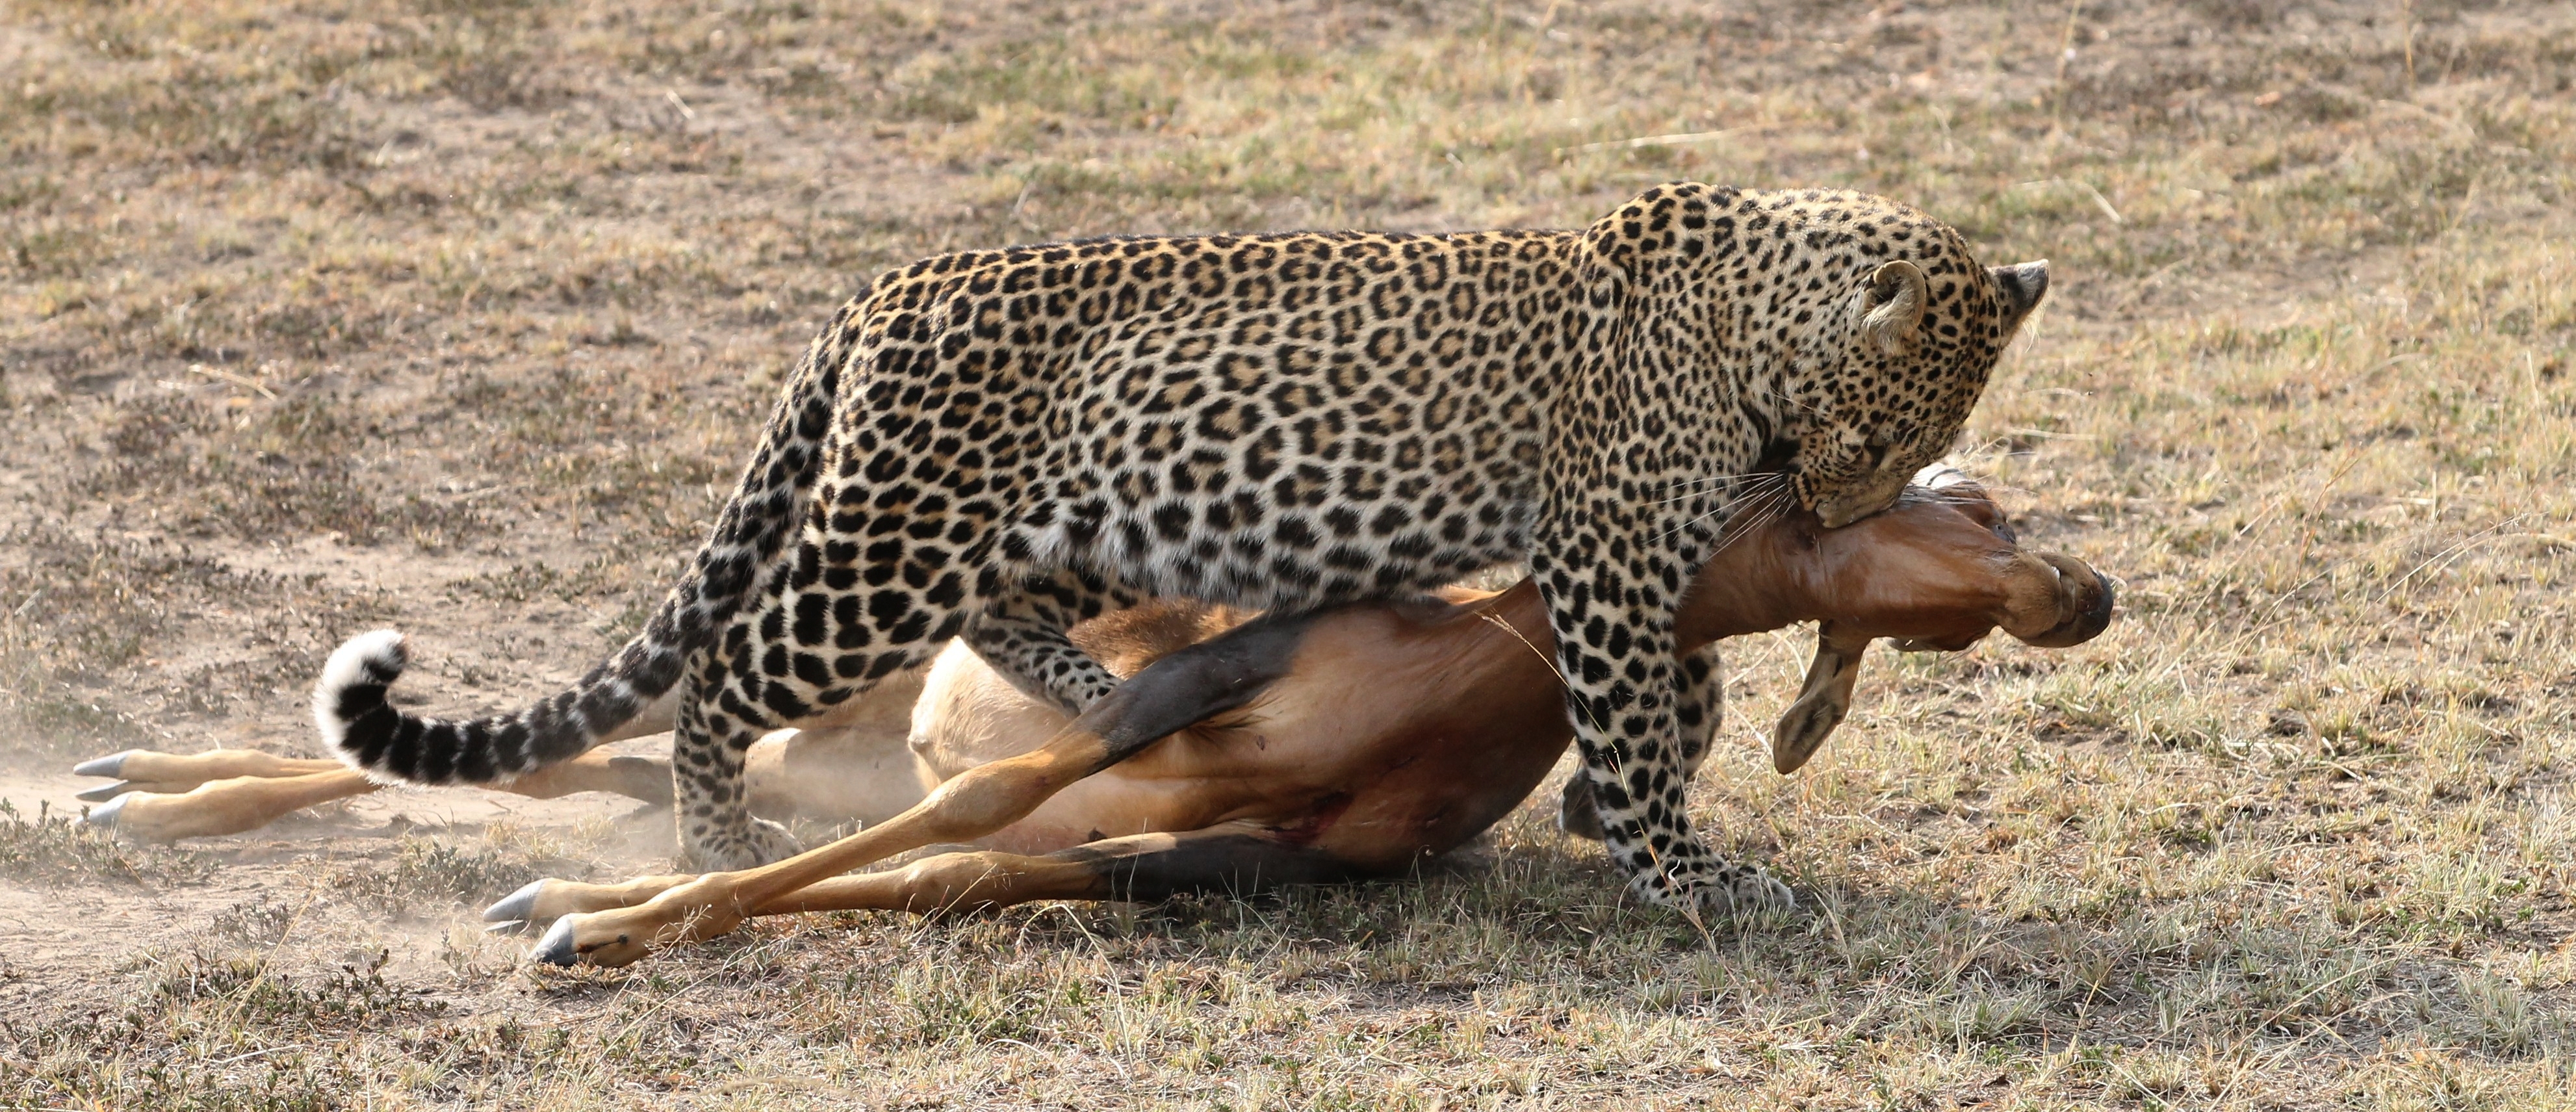 Плотоядное питание. Гепард леопард Ягуар. Ягуар догоняет антилопу. Гепард охотится на антилопу. Суперхищники гепард.